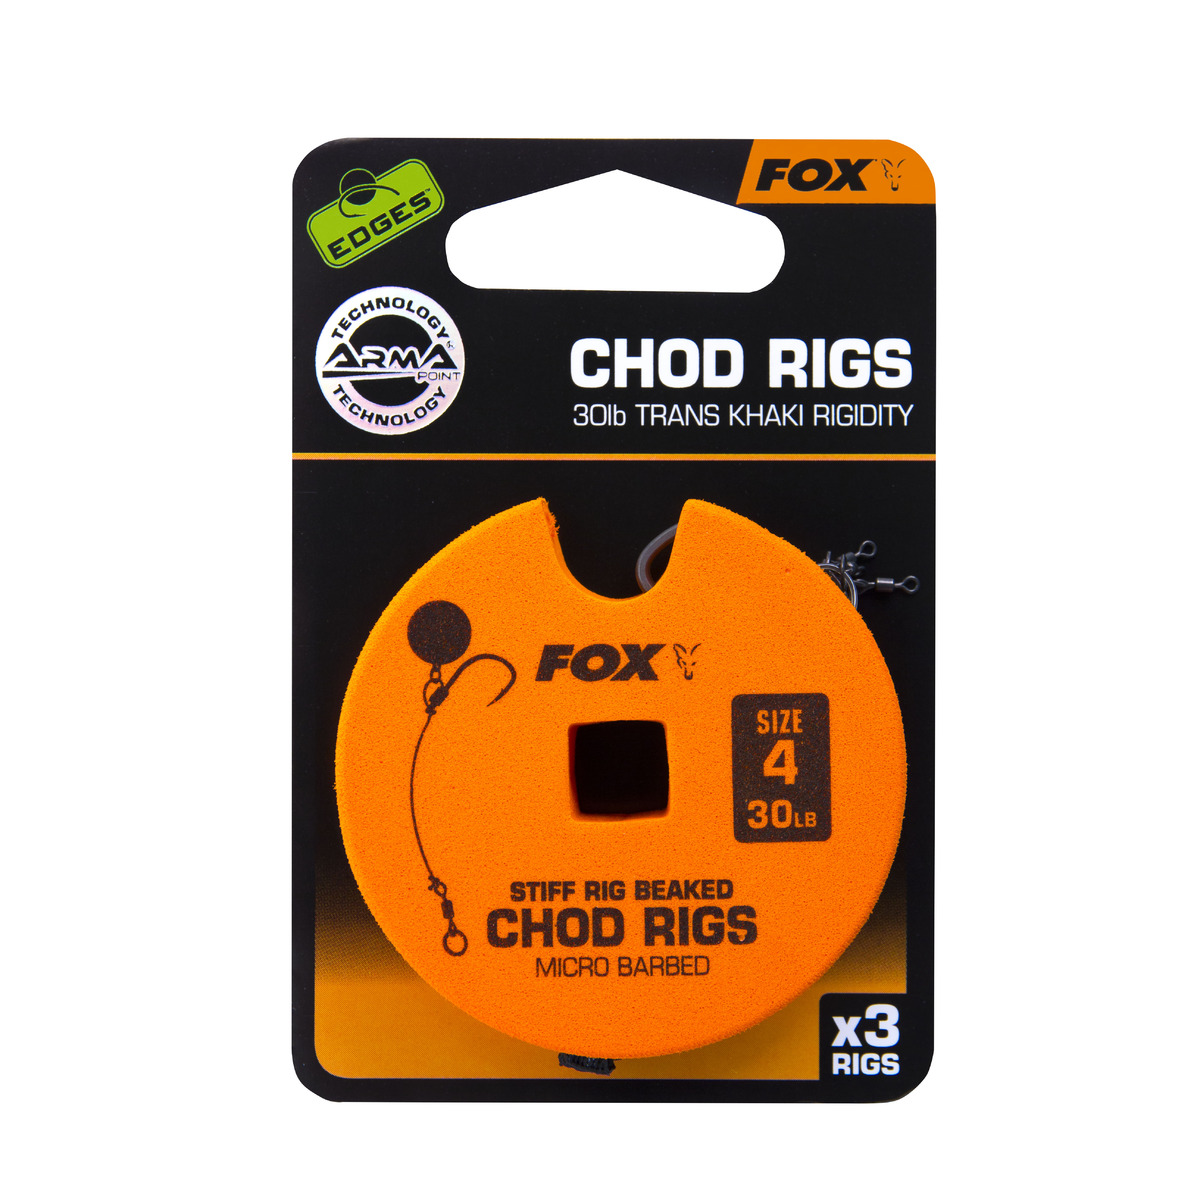 Fox Edges Chod Rigs - Standard - 30lb, size 4